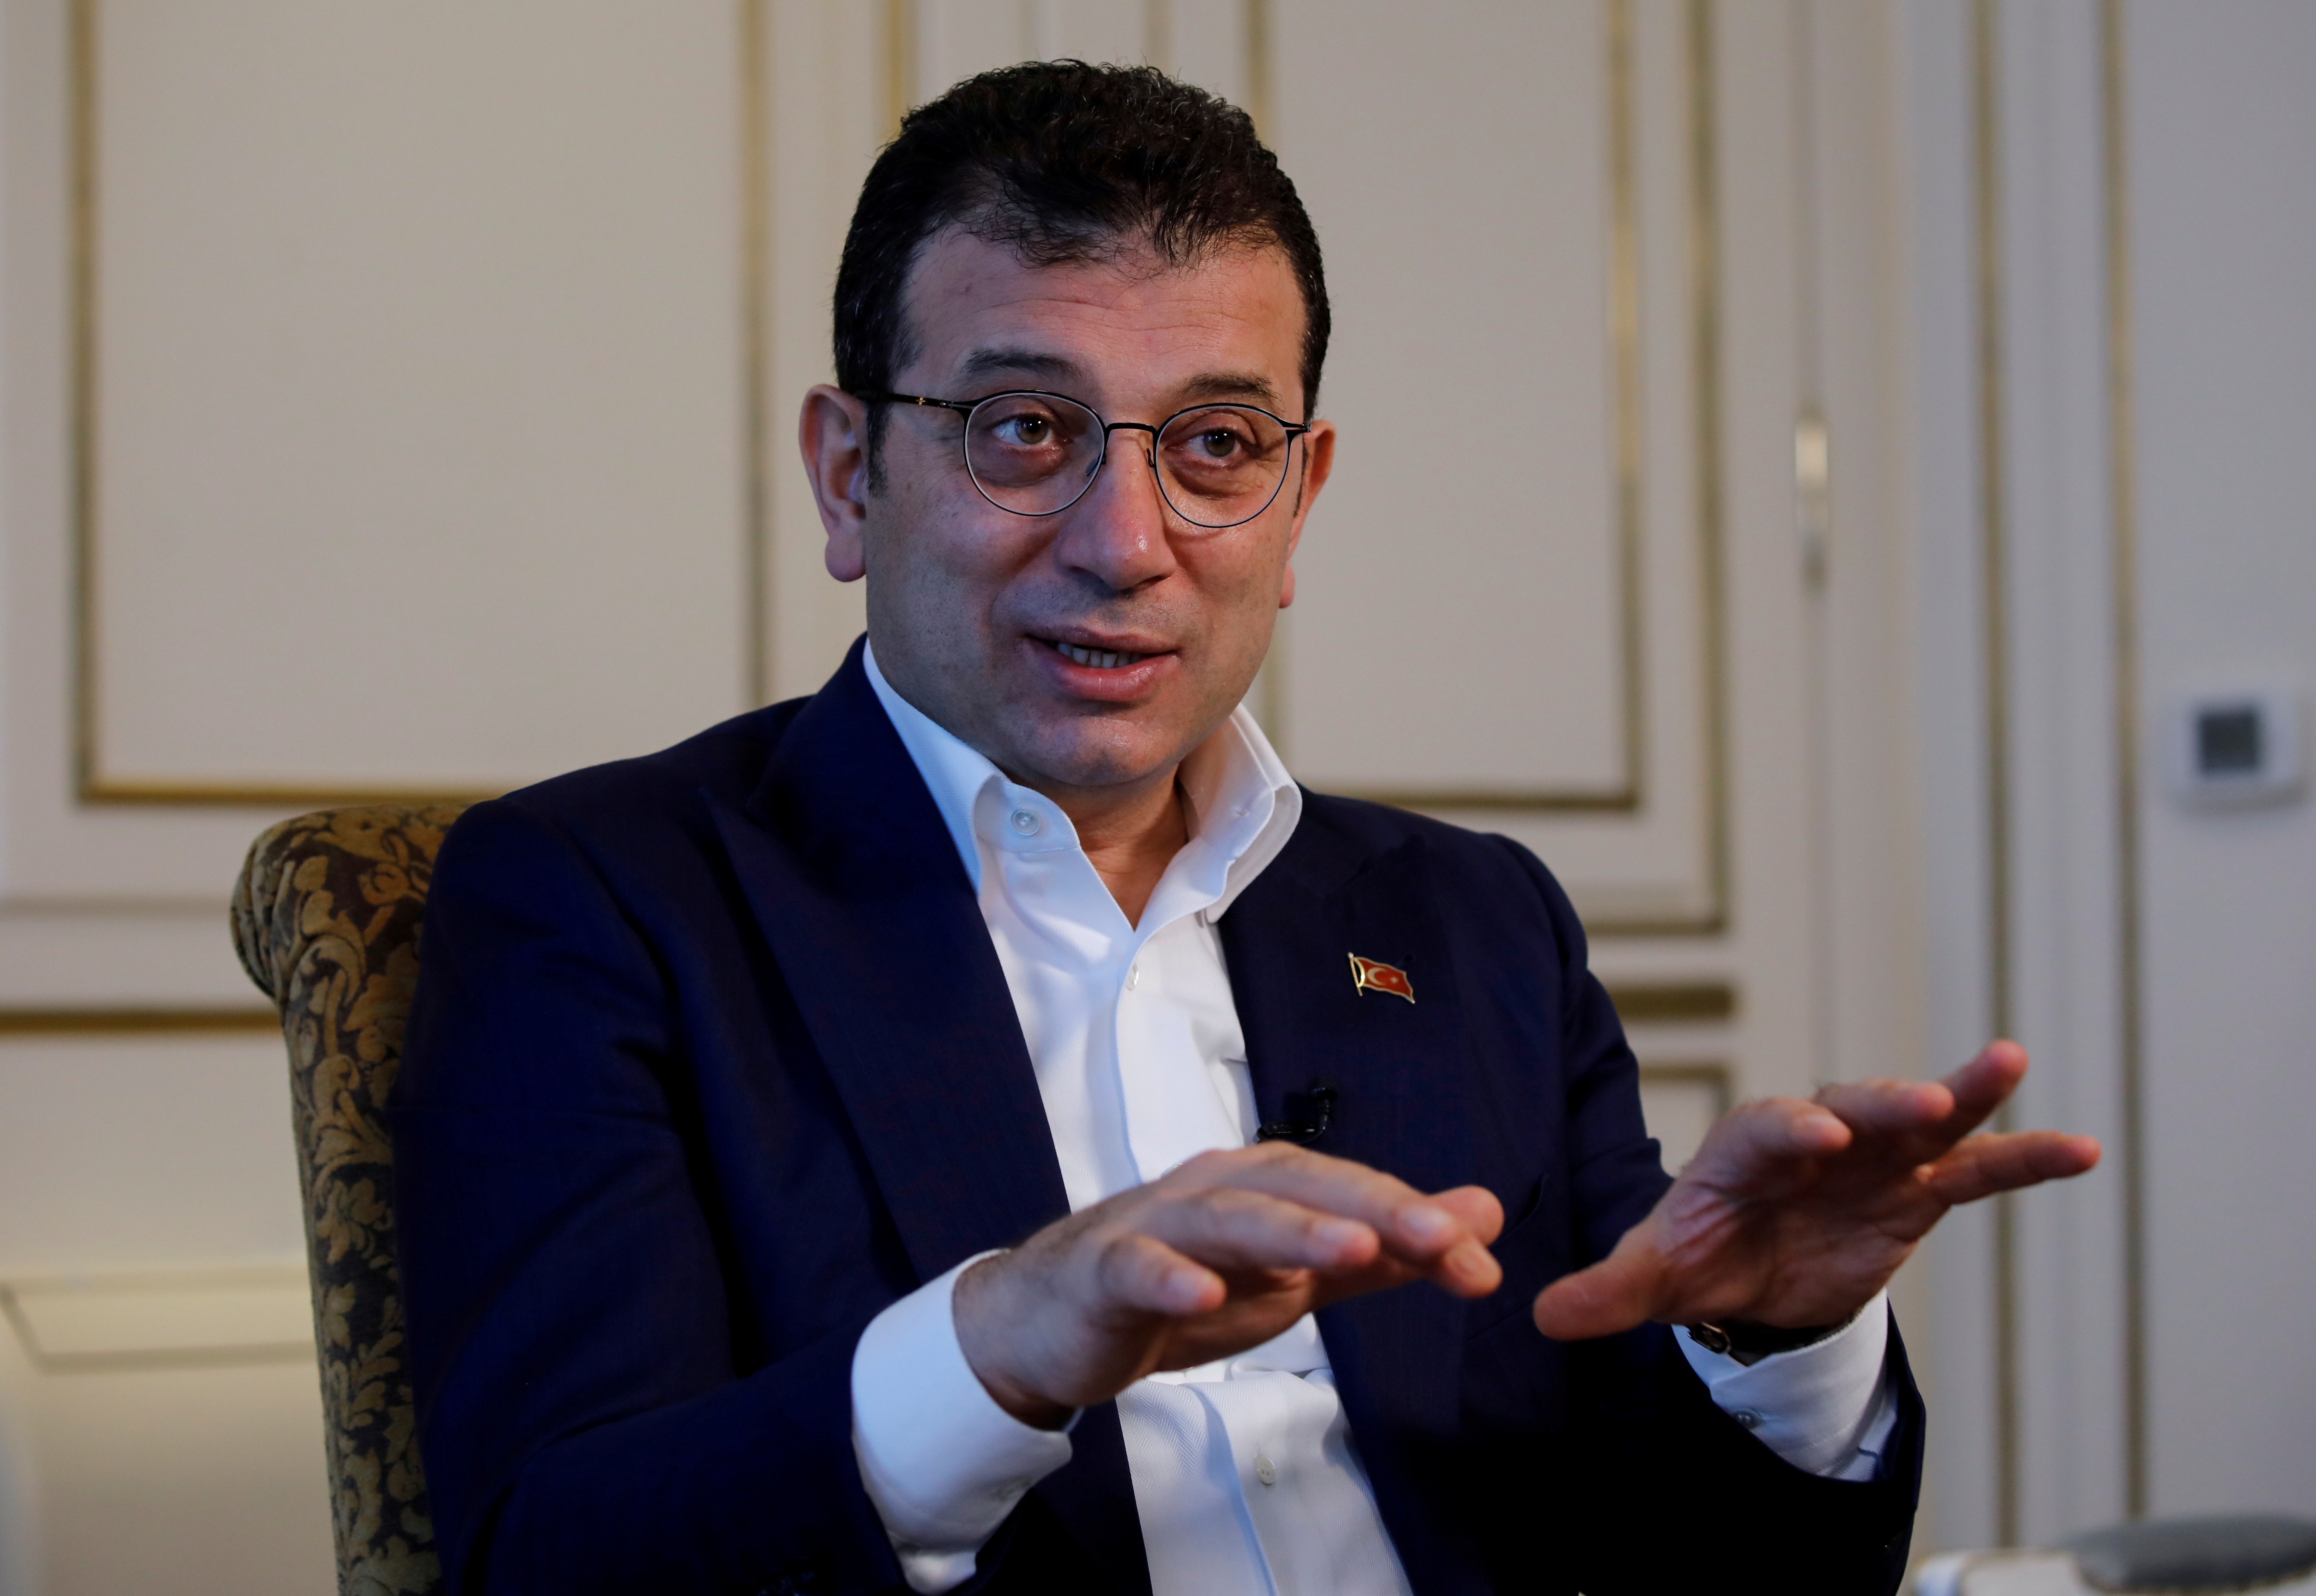 Mayor of Istanbul Ekrem Imamoglu gestures during an interview with Reuters in Istanbul, Turkey, December 6, 2021. REUTERS/Umit Bektas